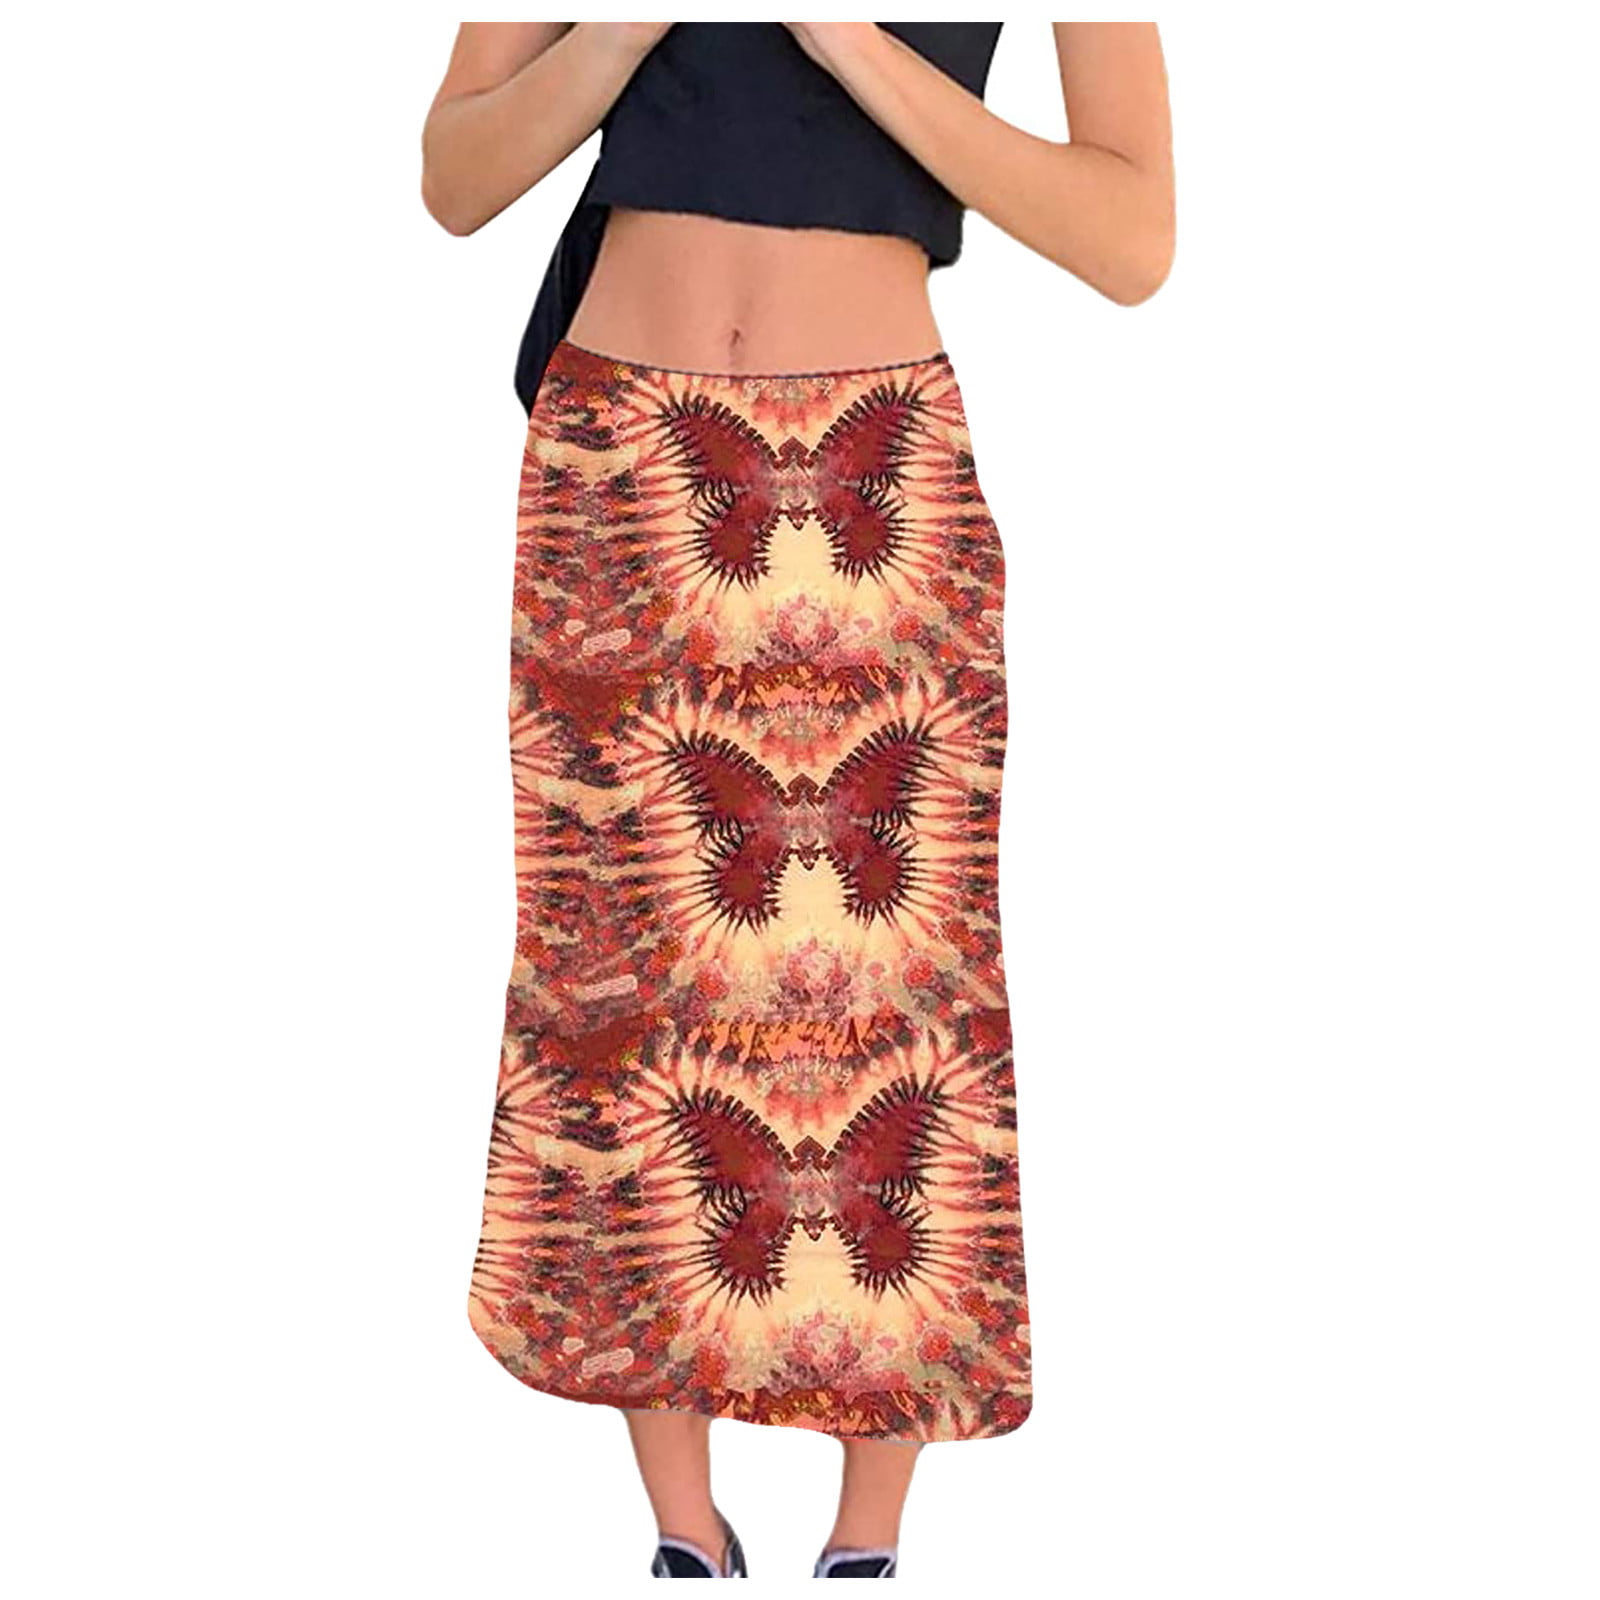 WOMEN FASHION Skirts Casual skirt Print Pink 44                  EU Precchio Colors Concept casual skirt discount 68% 